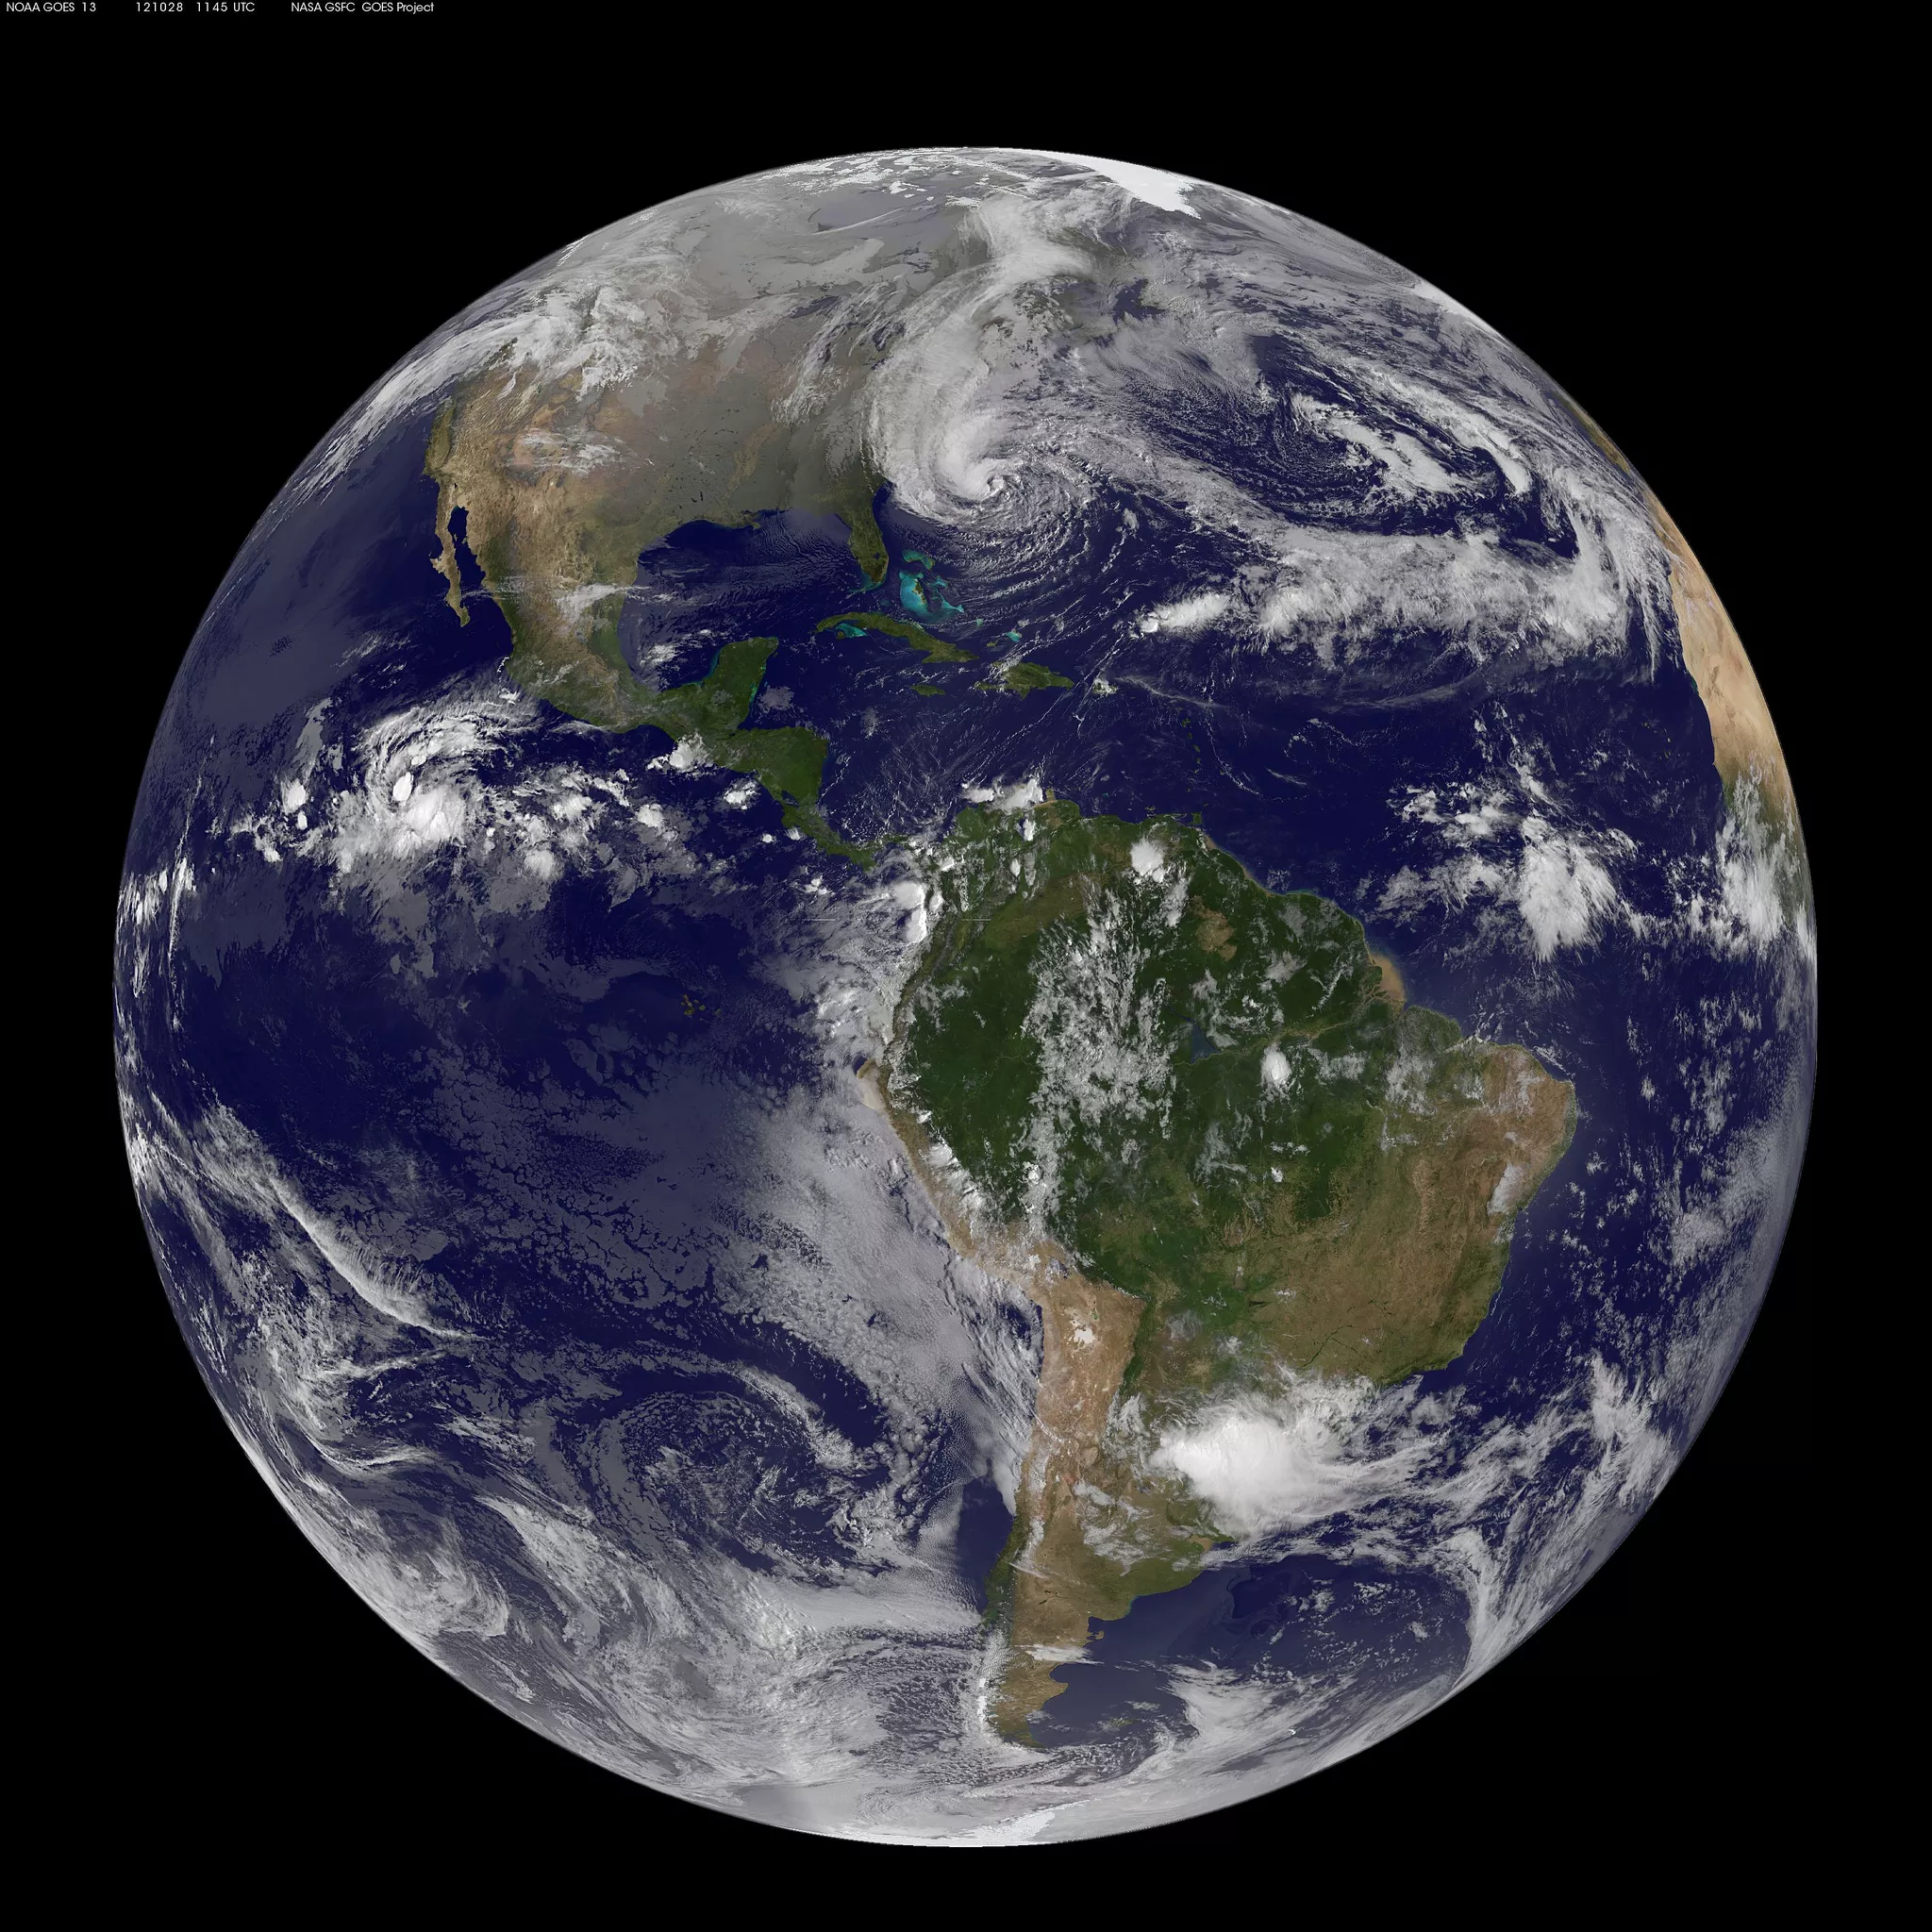 Full Disk view of Hurricane Sandy via GOES-13